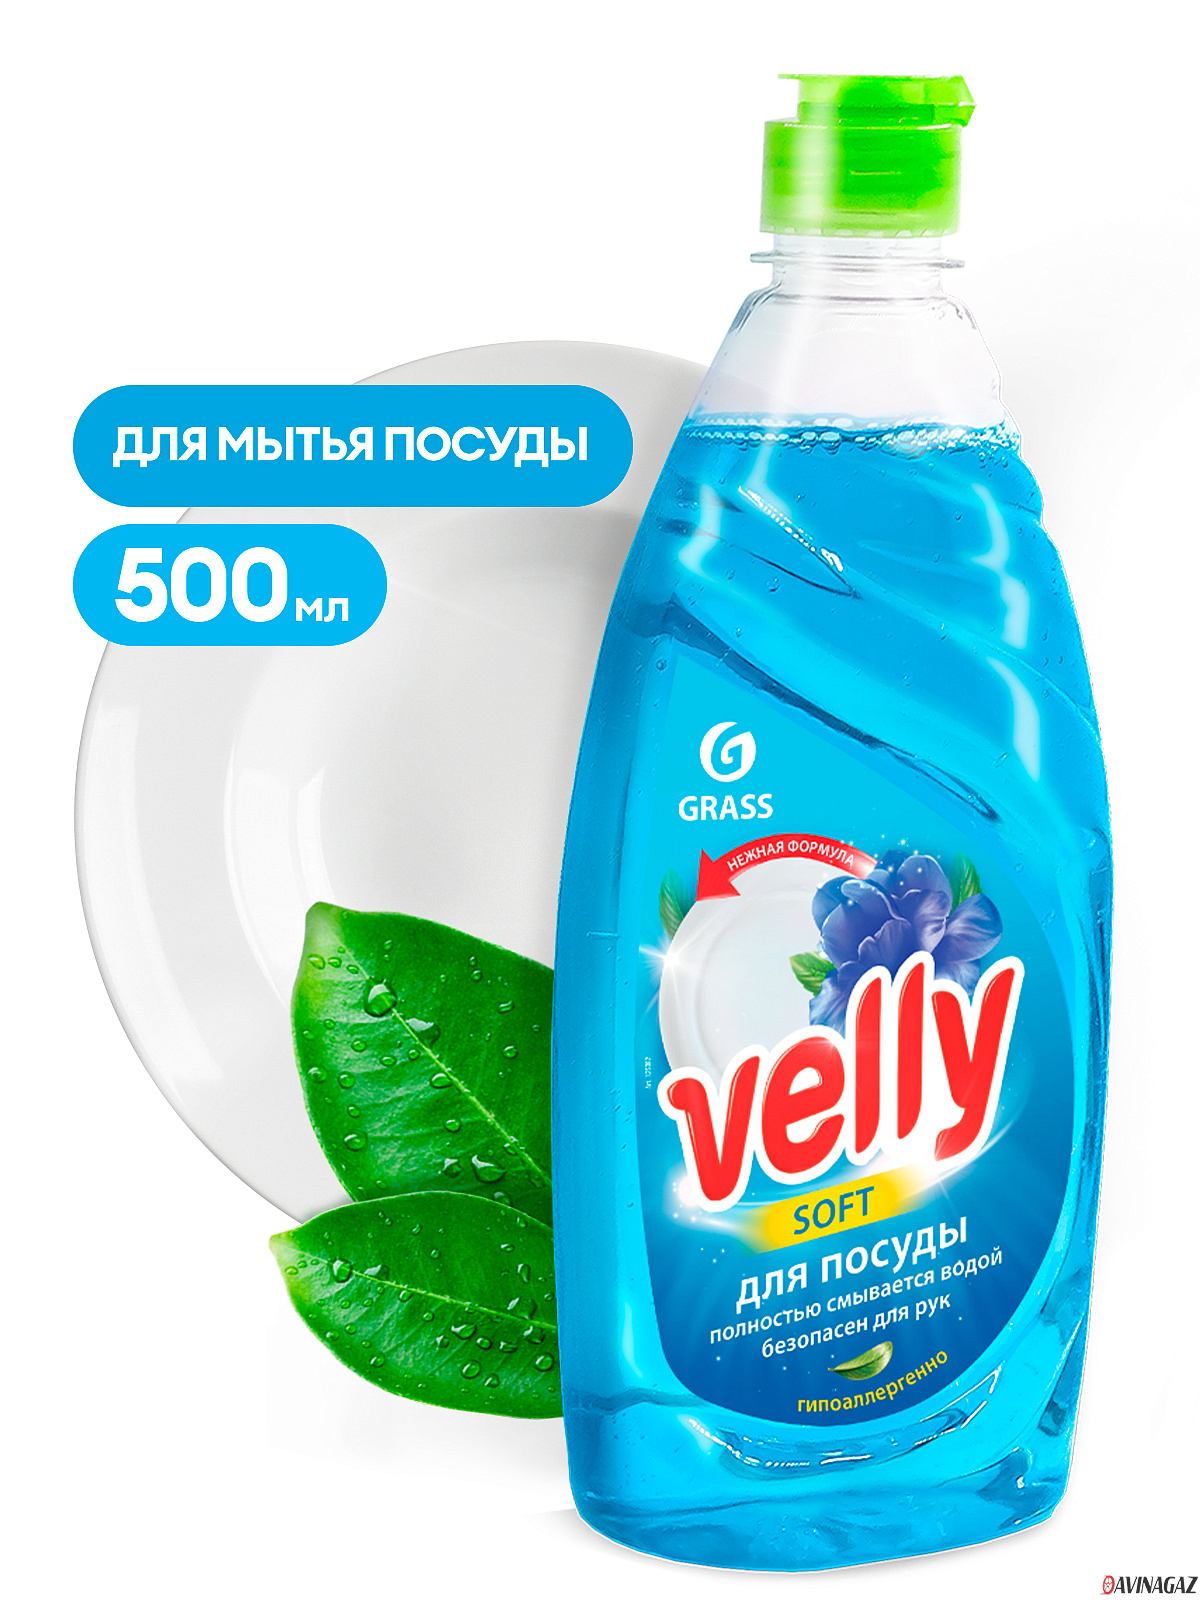 GRASS - Средство для мытья посуды «Velly» Нежные ручки, 500мл / 125382